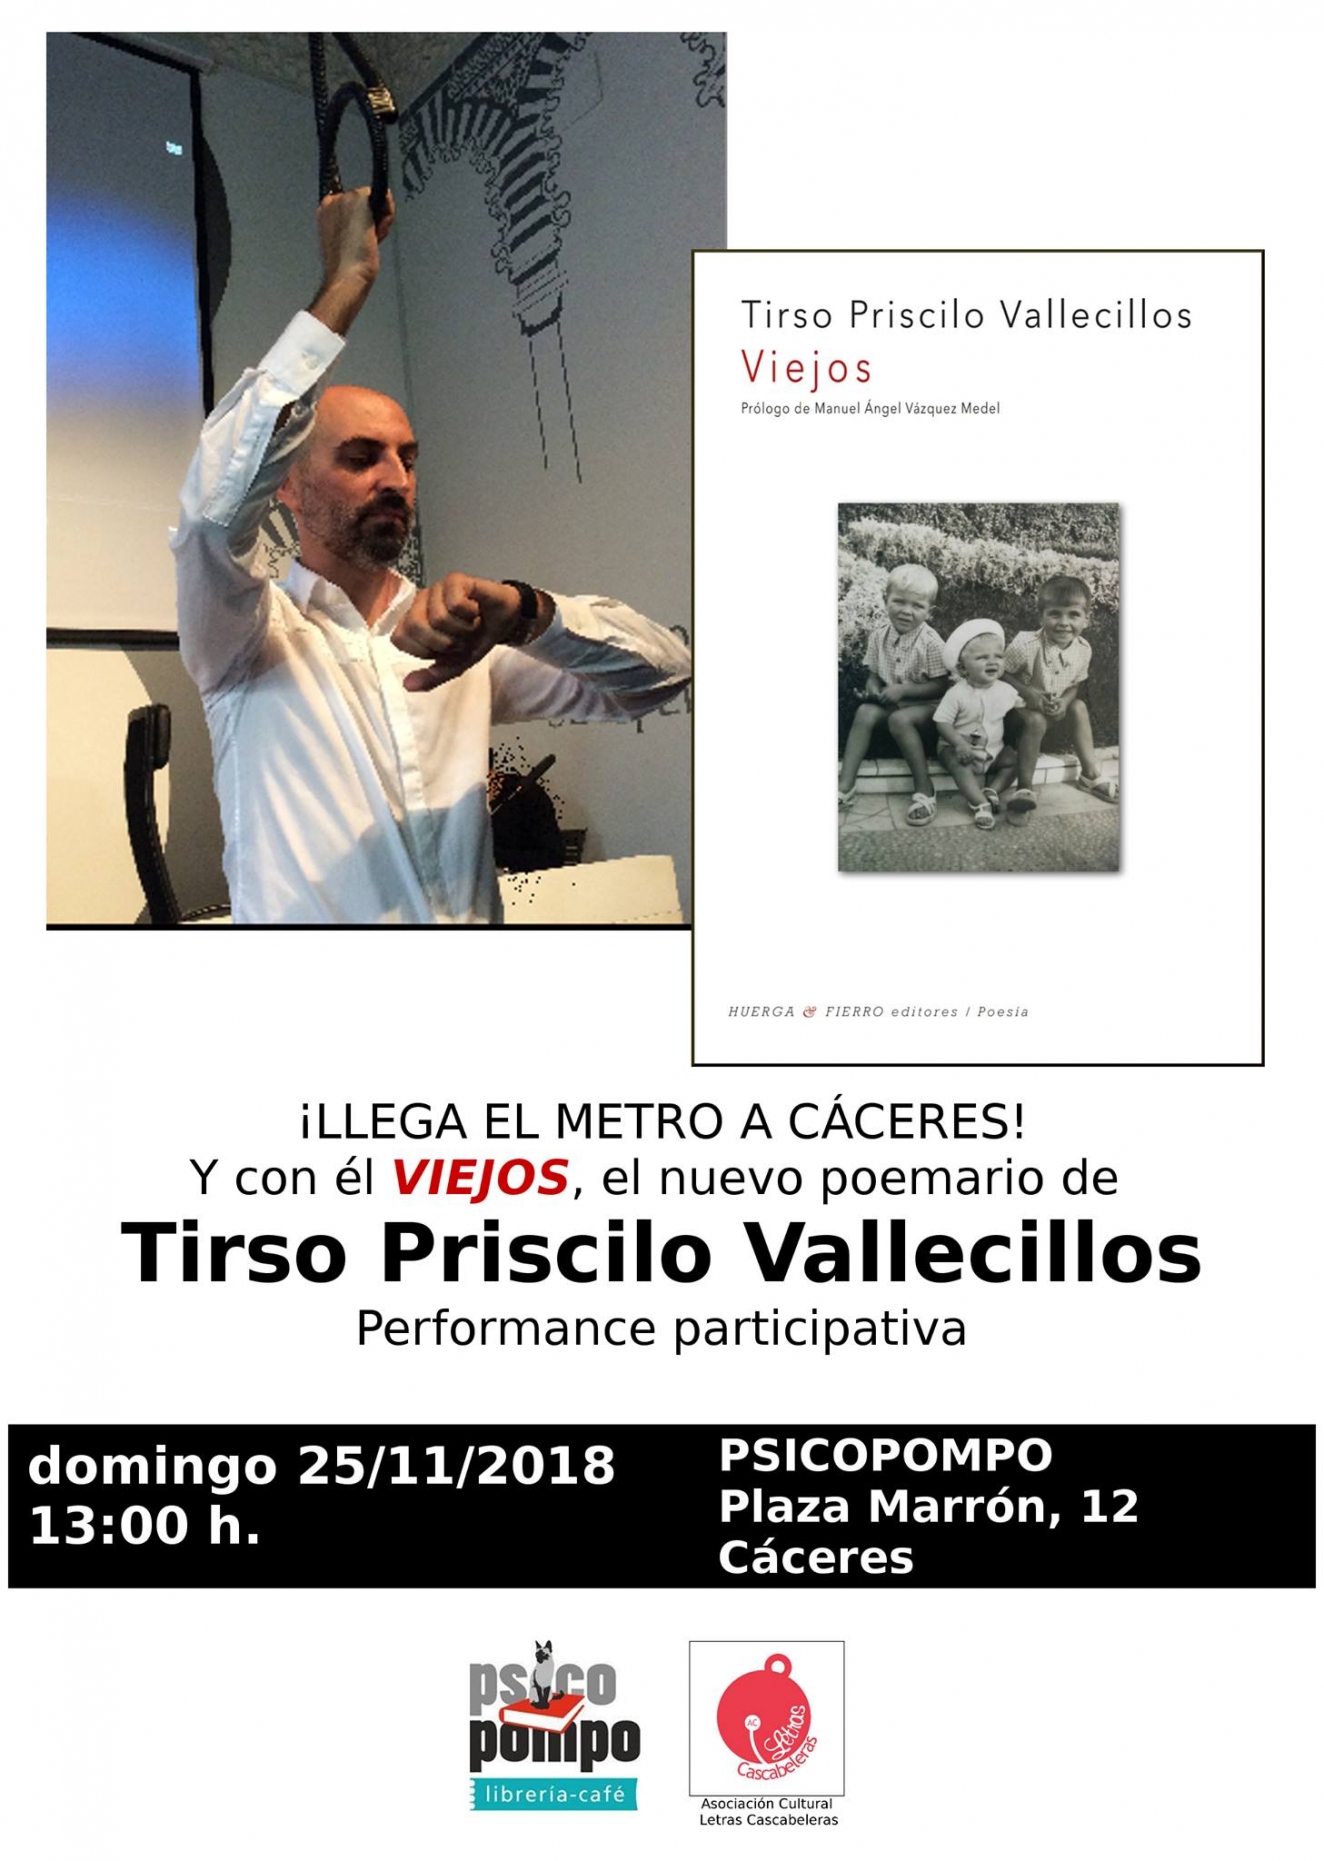 Tirso Priscilo Vallecillos || performance